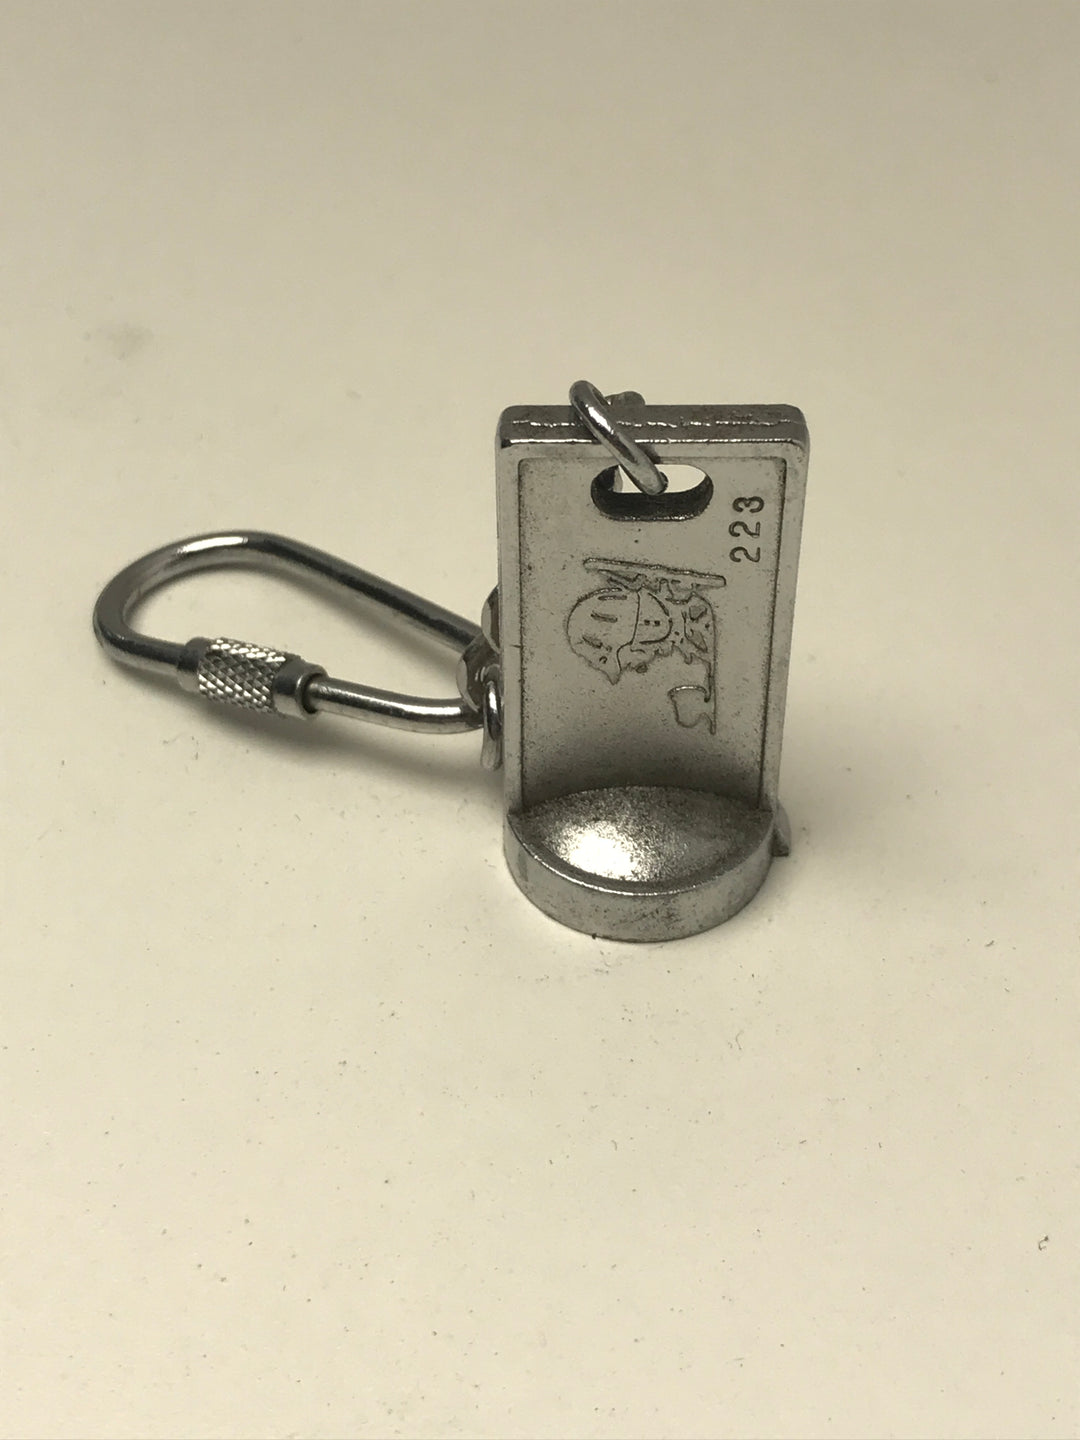 SSR lug nut key (magnetic)